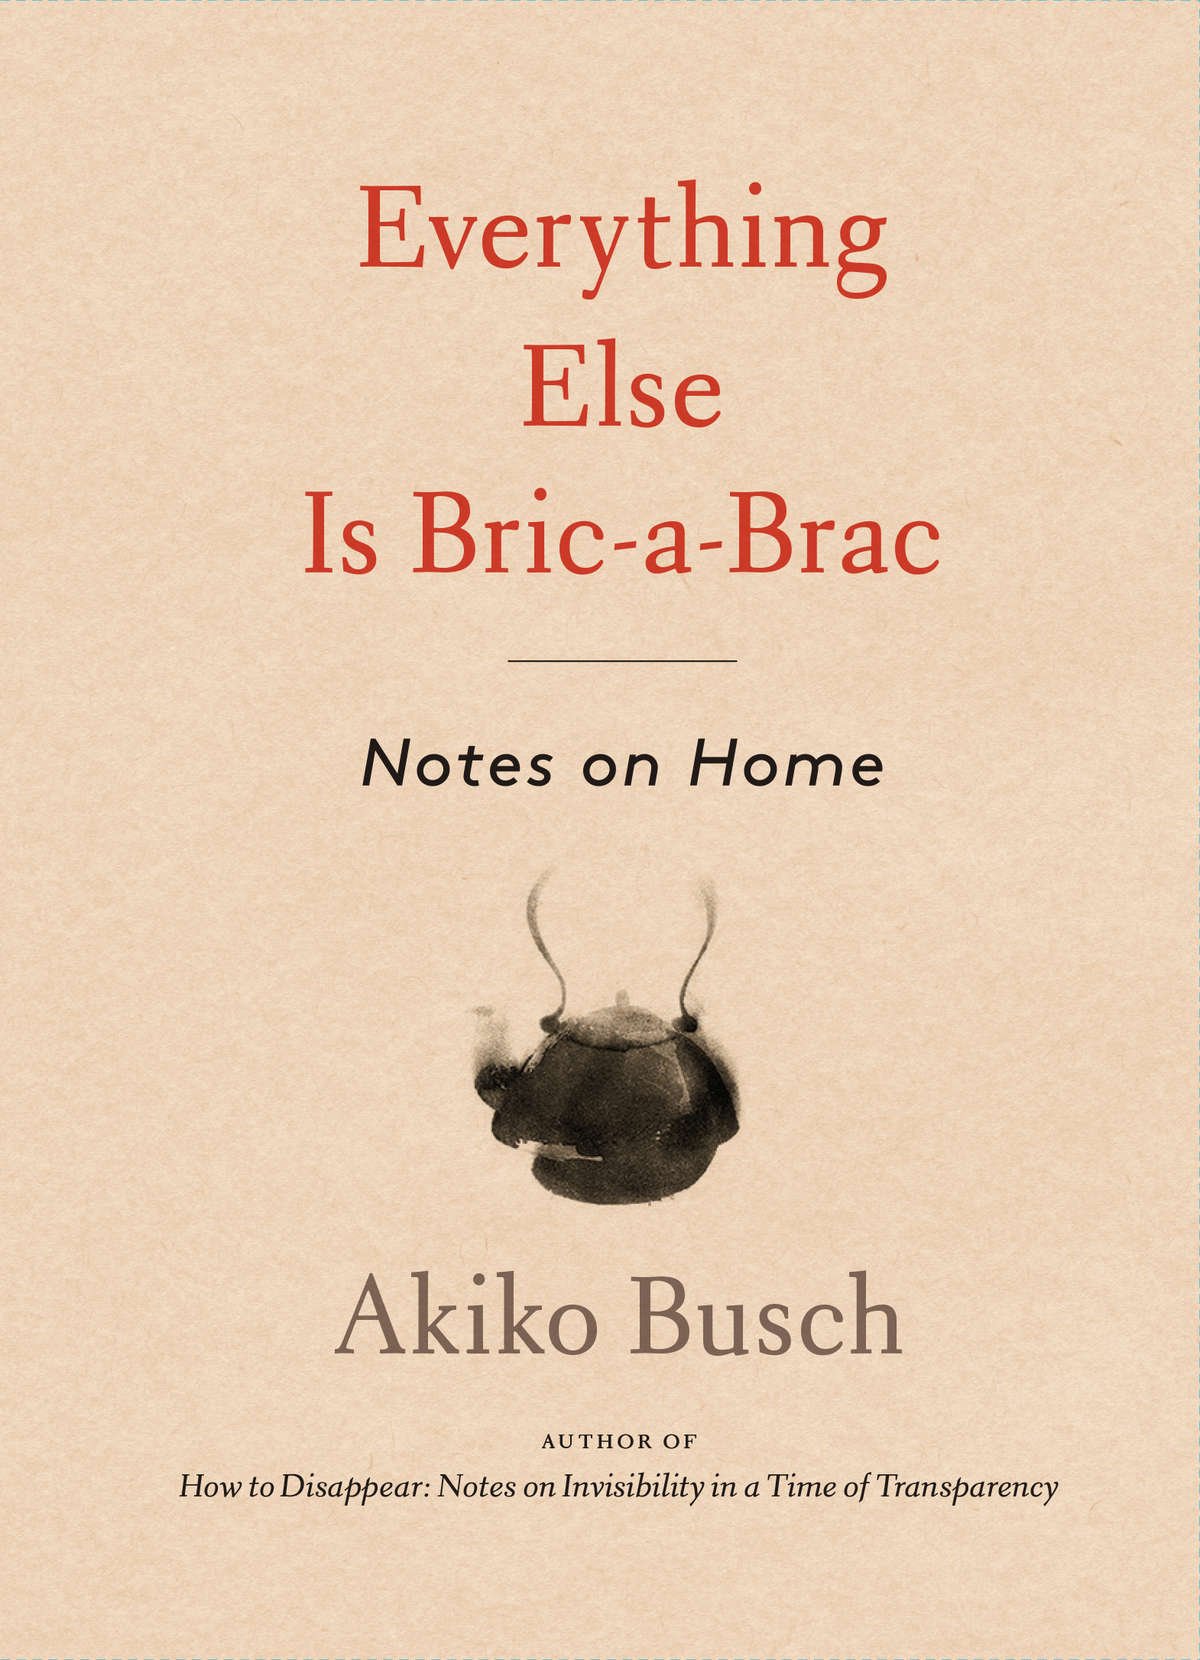 Everything Else is Bric-a-Brac